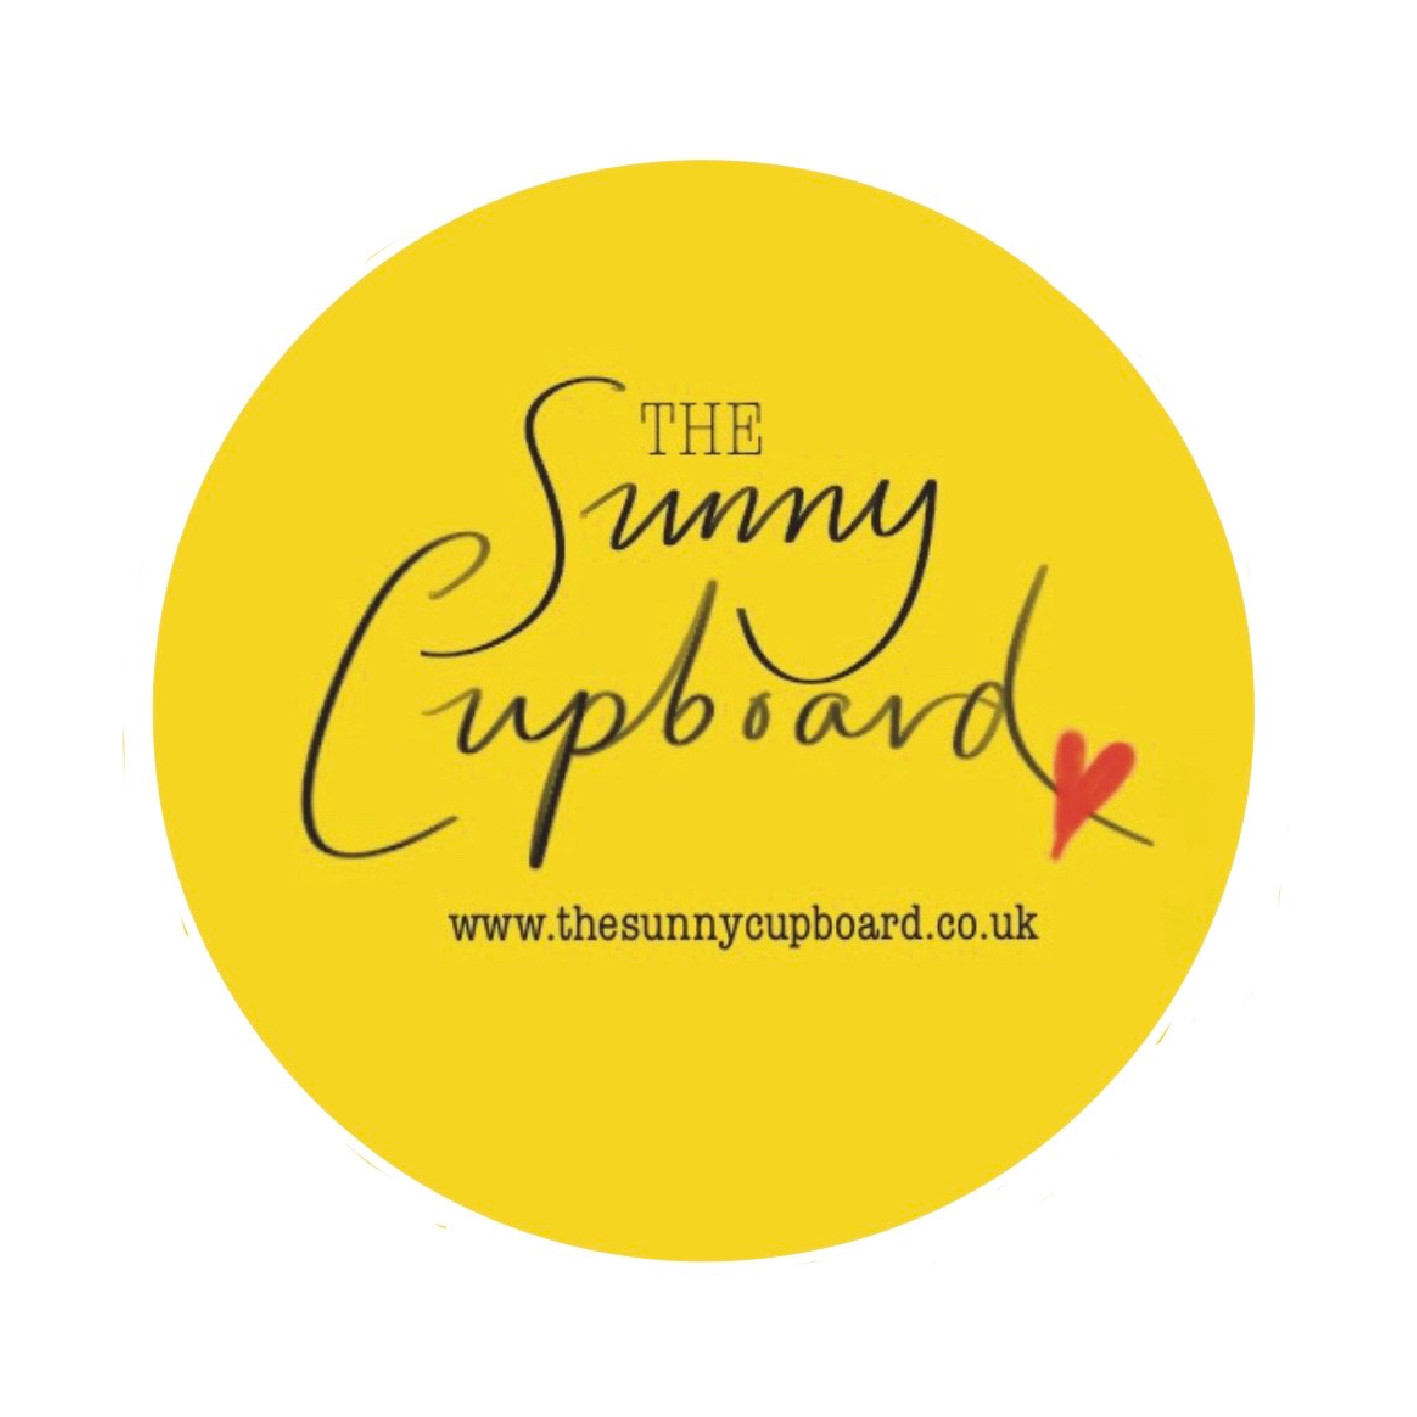 The Sunny Cupboard